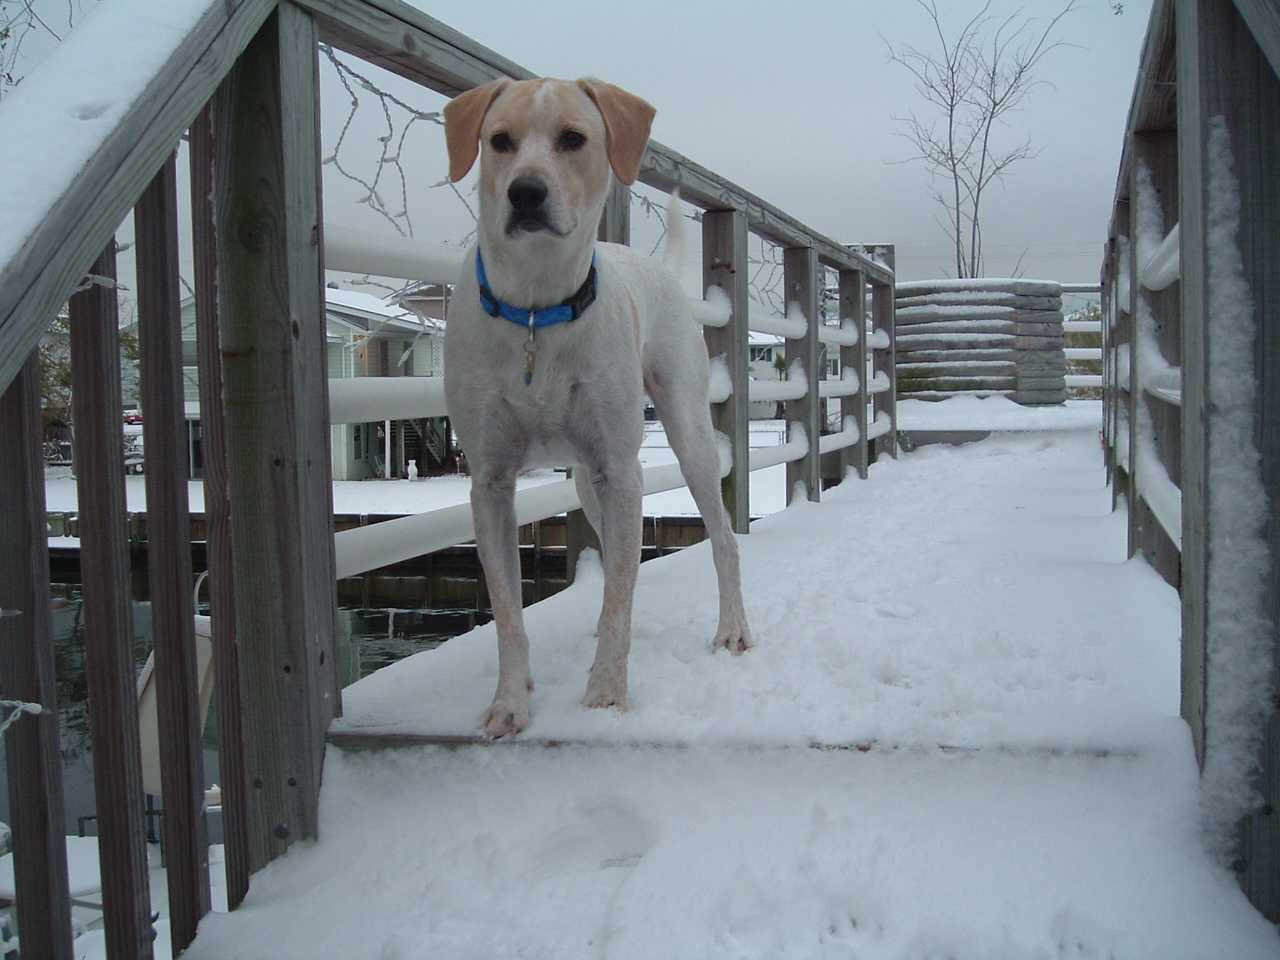 Baxter the Hall's dog enjoying the snow.